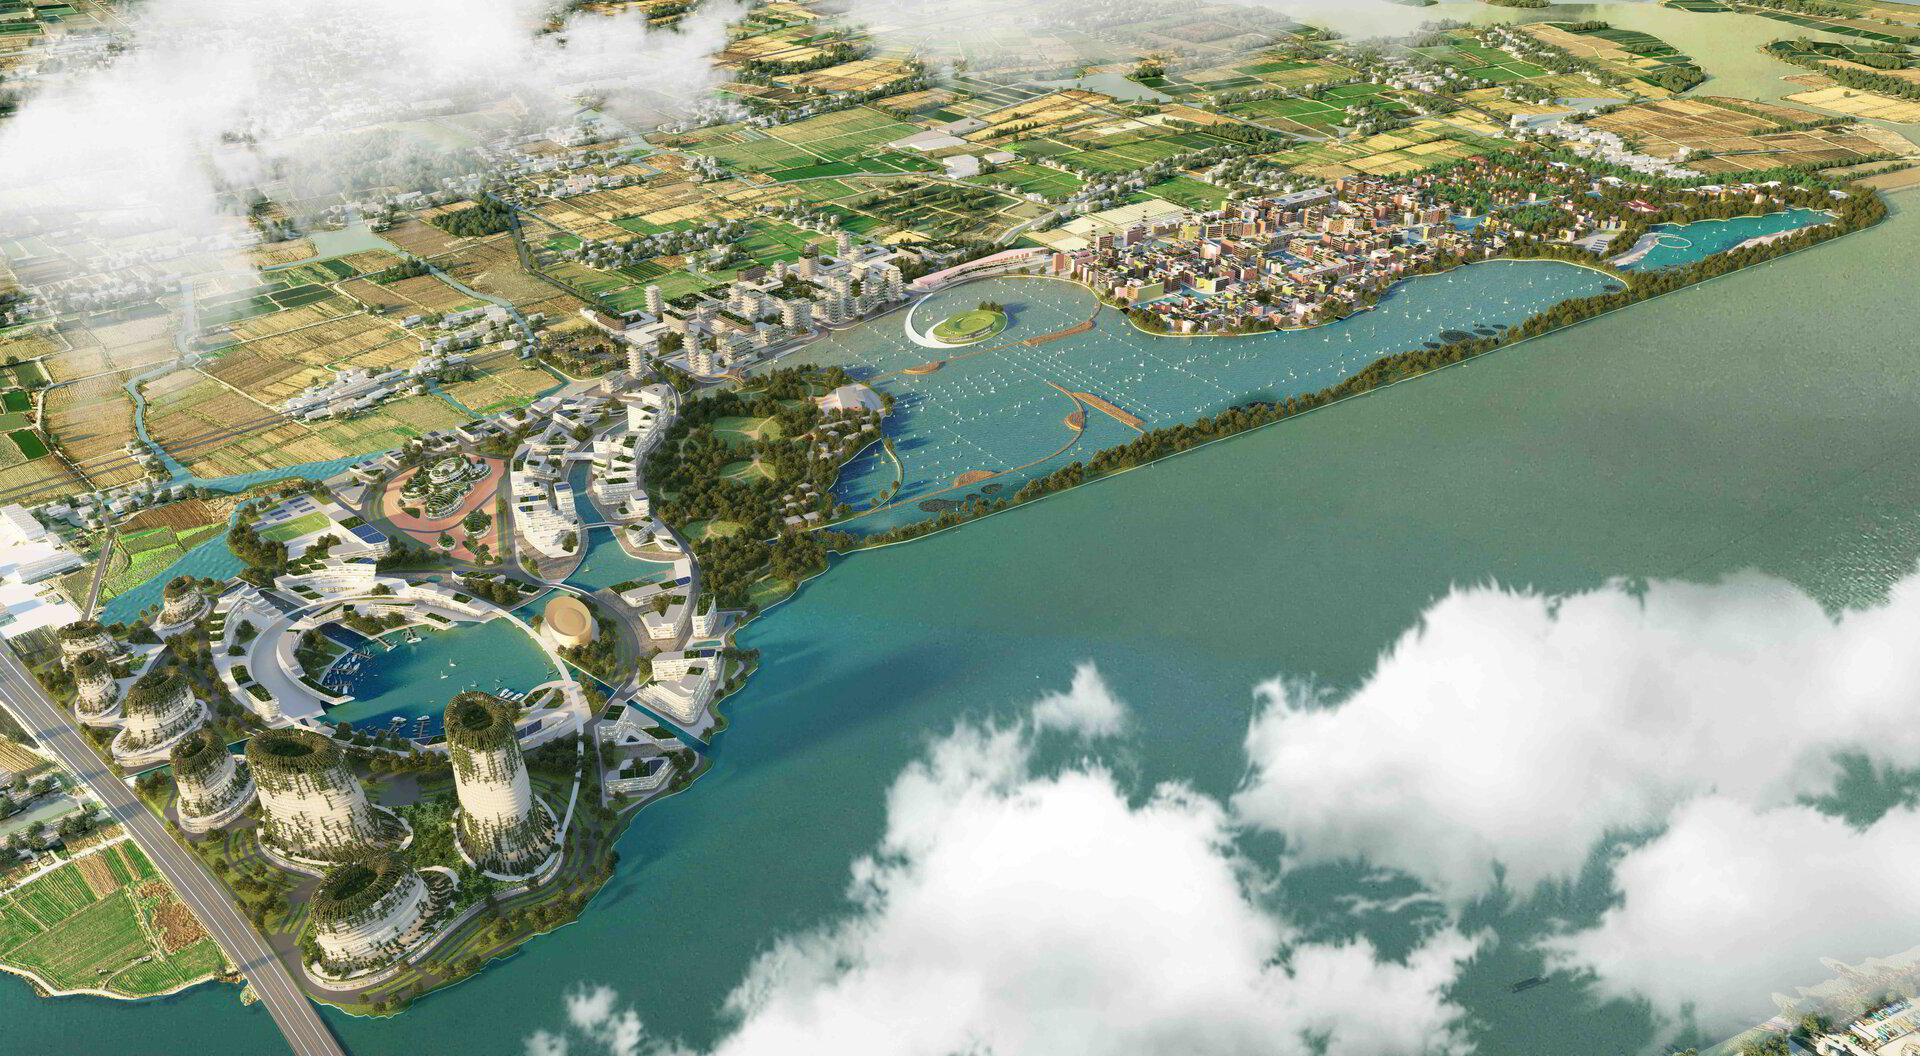   The Blue Loop, Yangtze River Delta area, Shanghai, China, Pininfarina Architecture - Image copyright:@Pininfarina Architecture